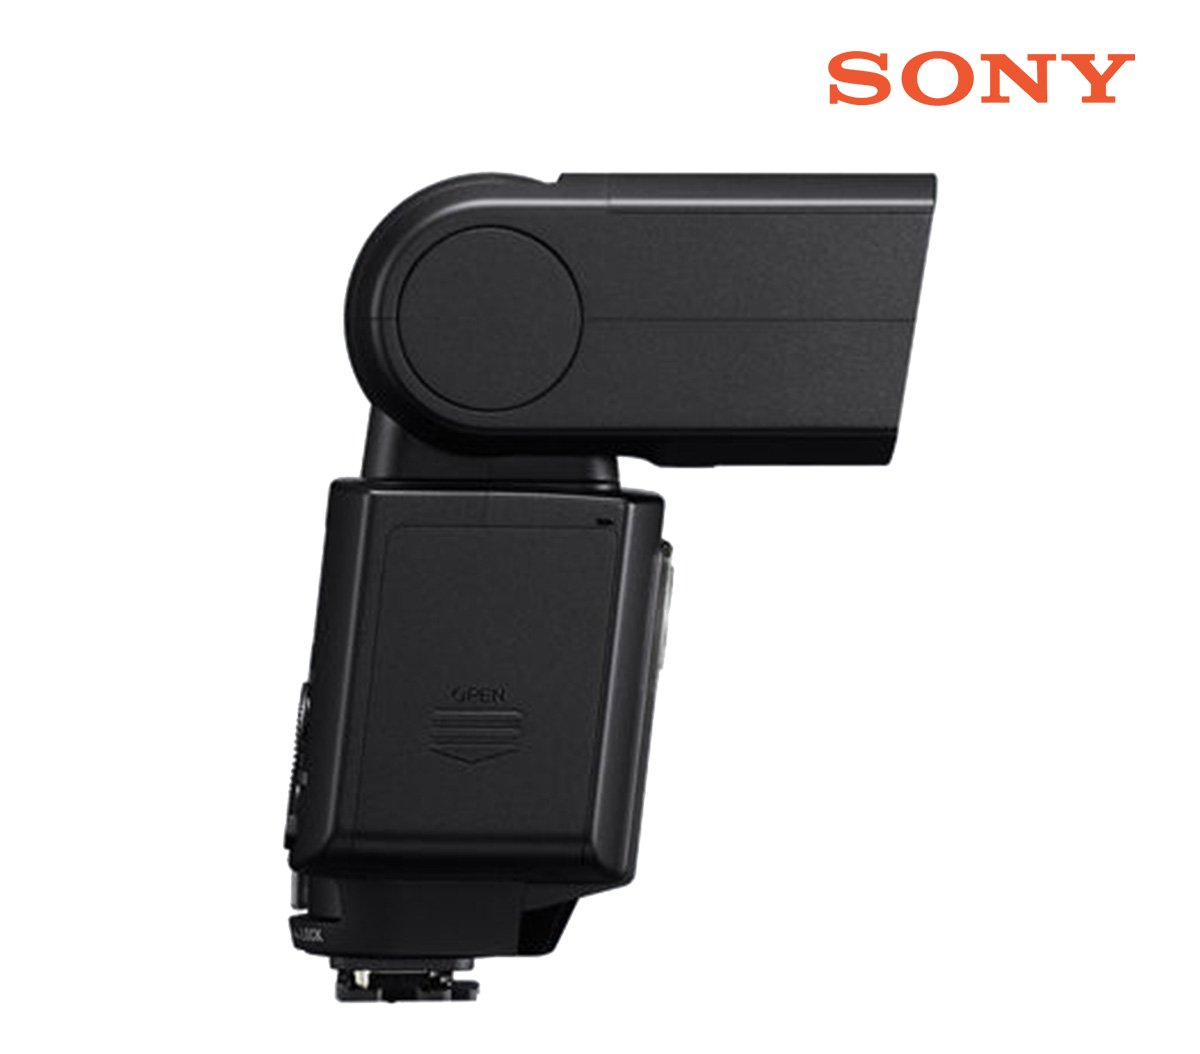 Sony HVLF45RM External Flash